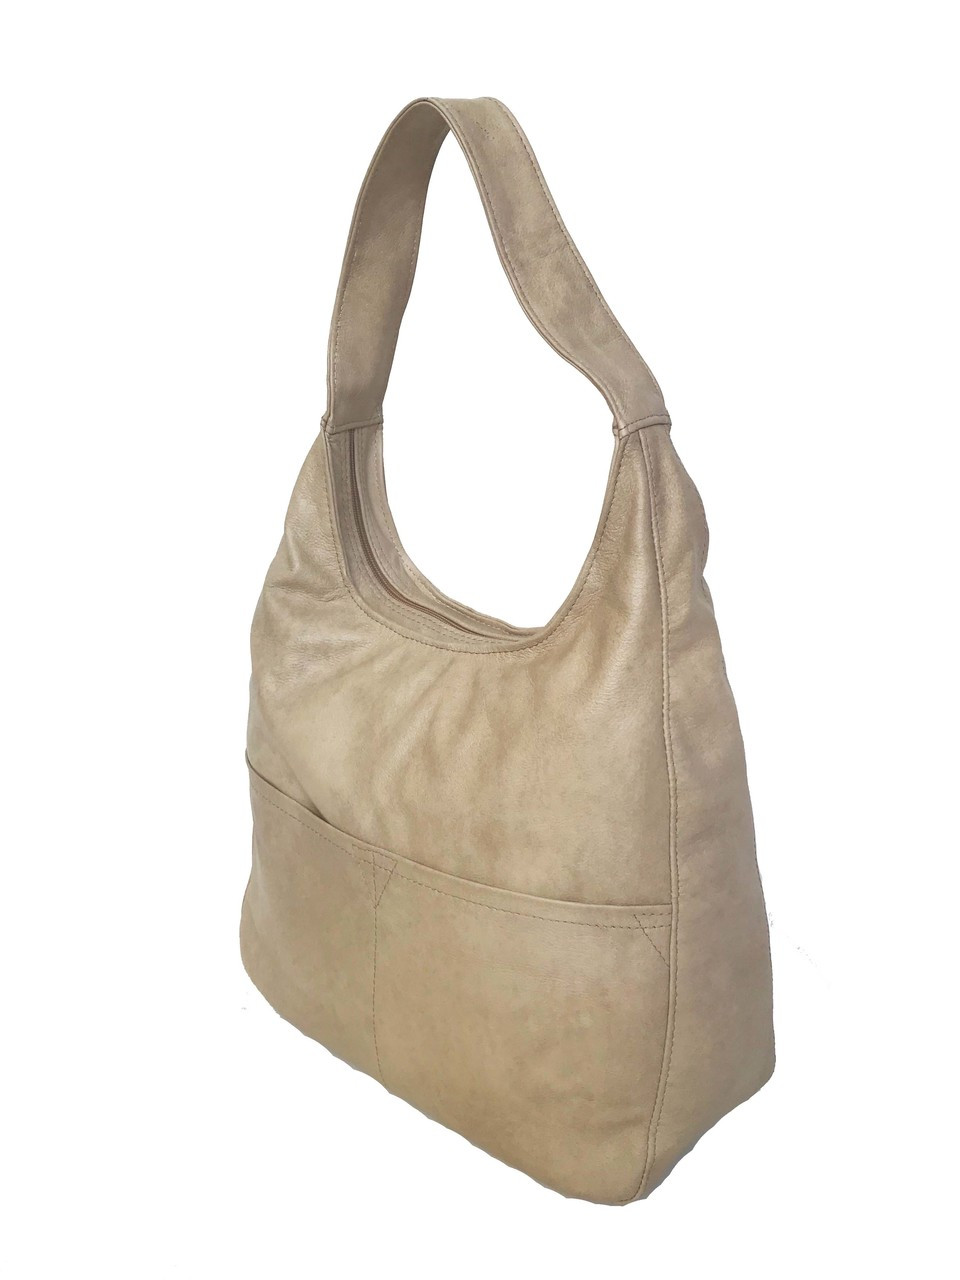 Ivory Leather Hobo Bag, Casual Everyday Handbag, Cocoon - Fgalaze ...